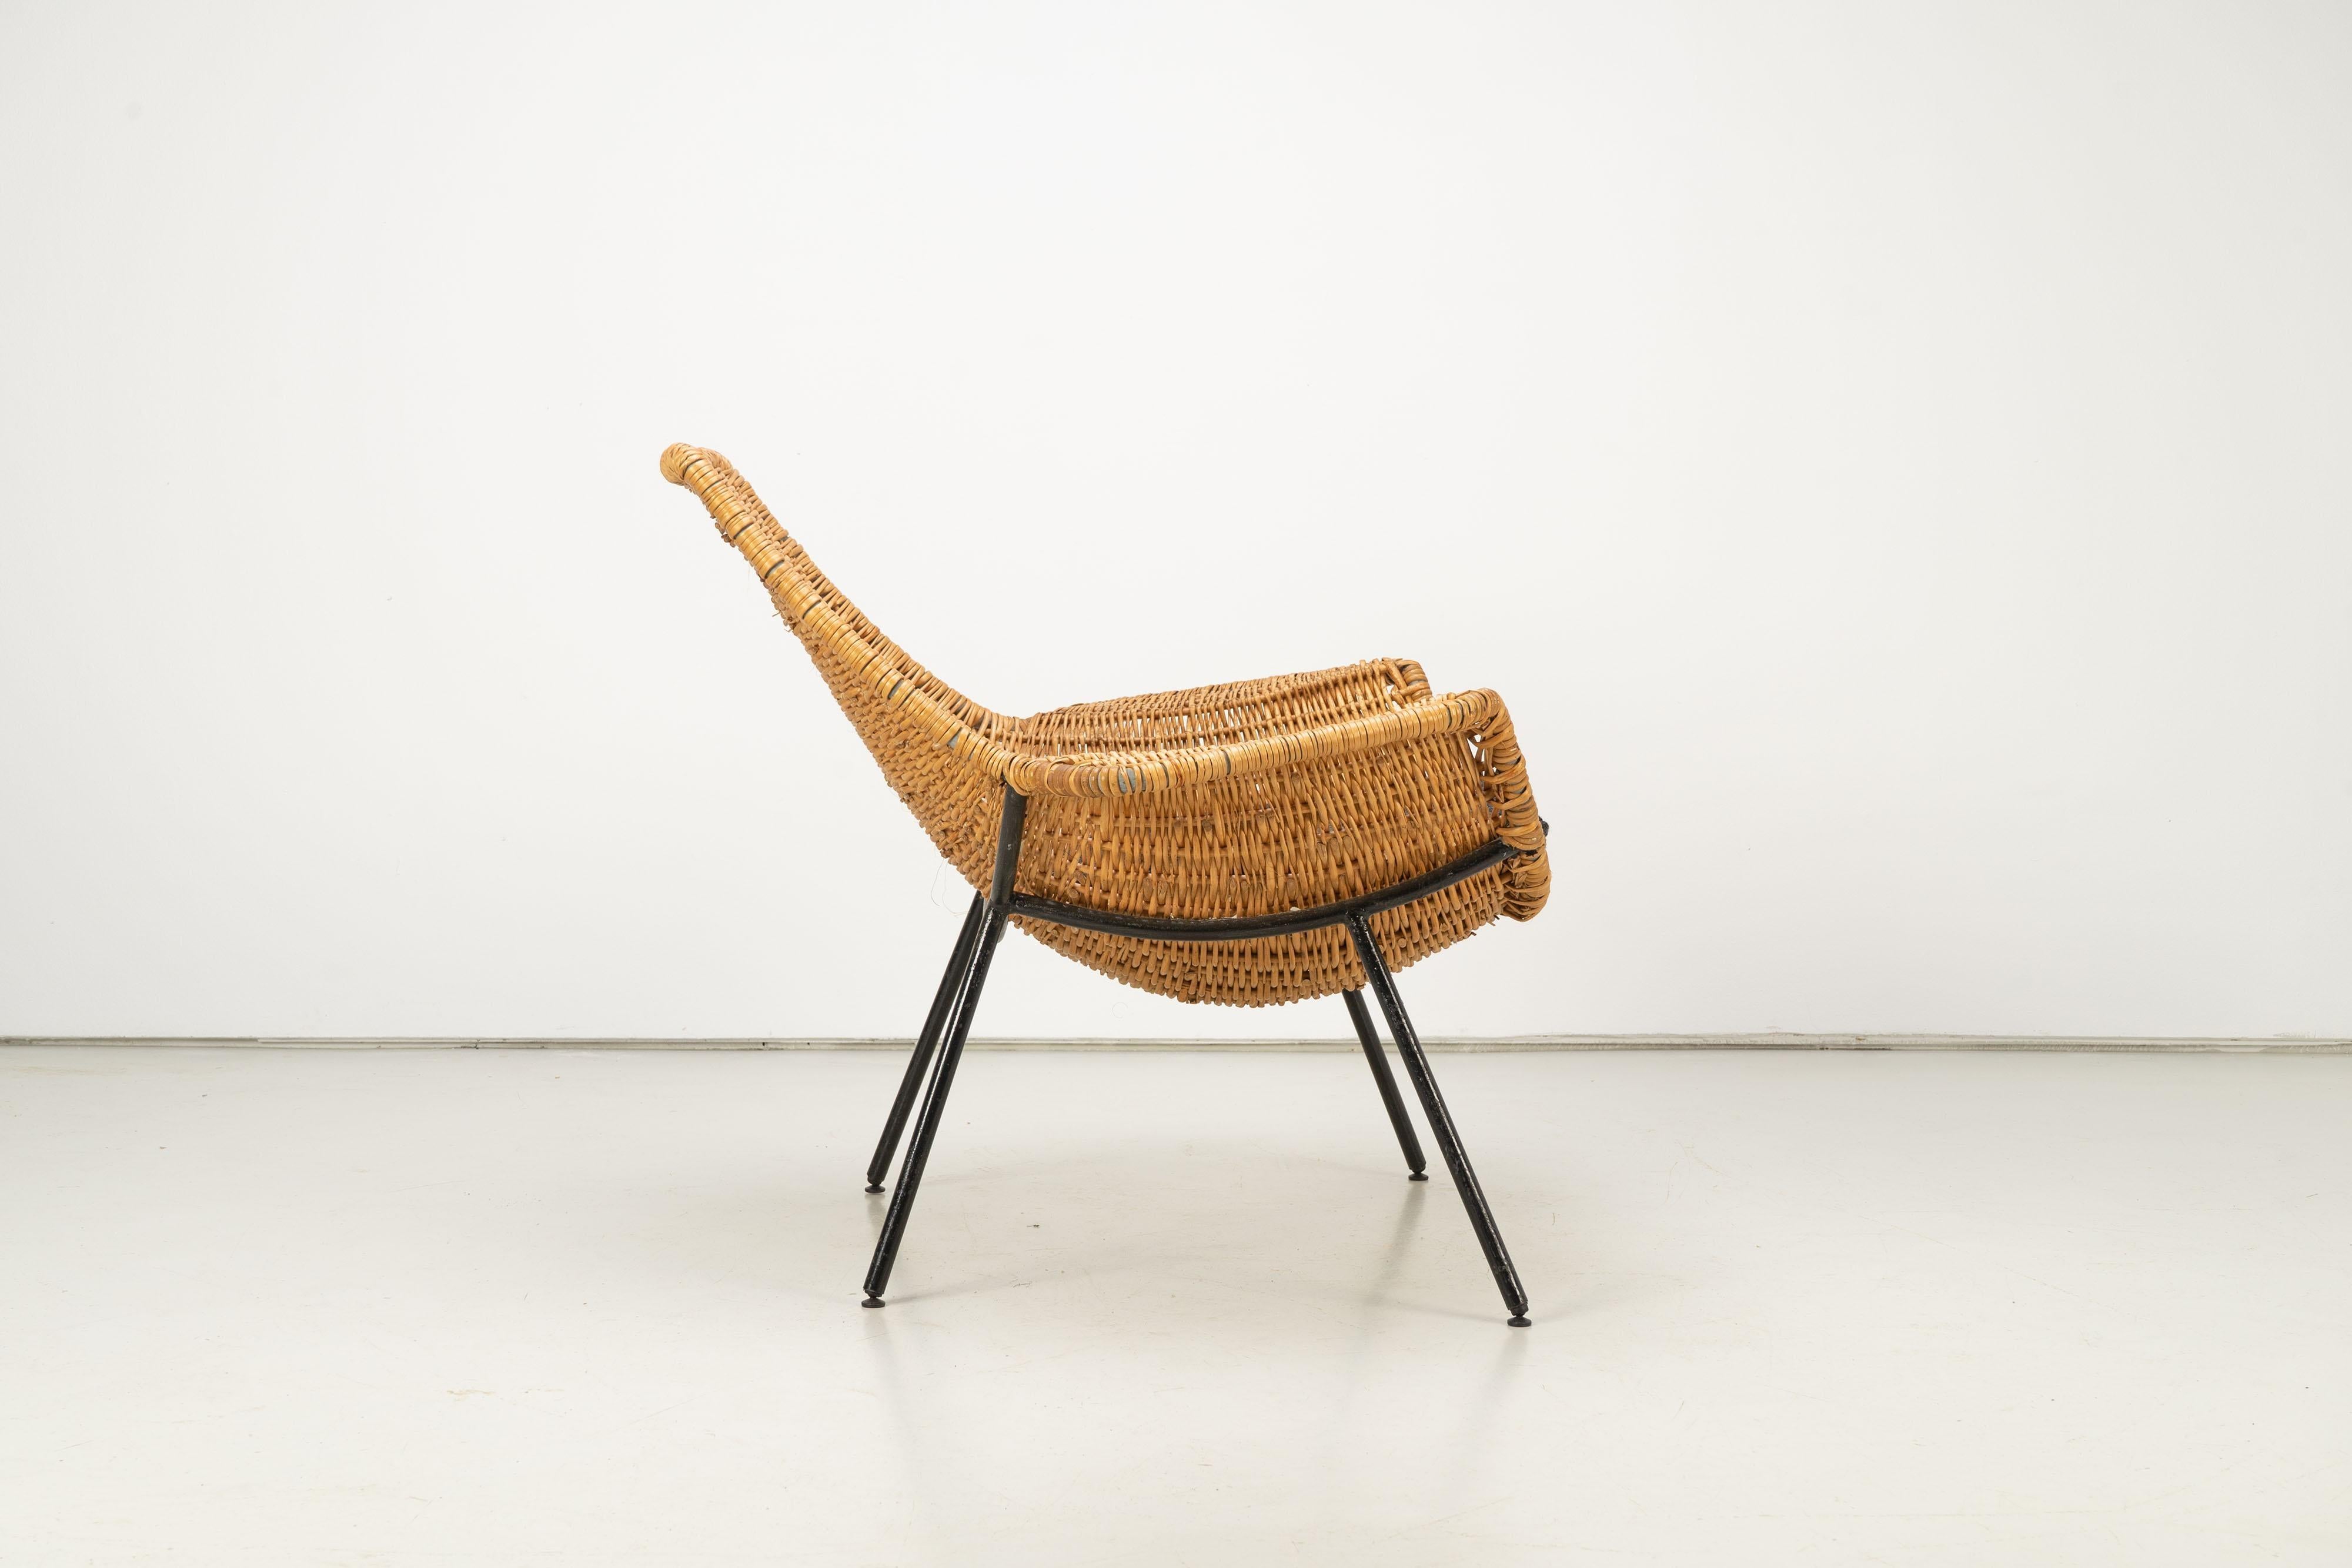 Italian Mid-Century Modern Rattan Lounge Chair by Giancarlo De Carlo, Italy, 1954 For Sale